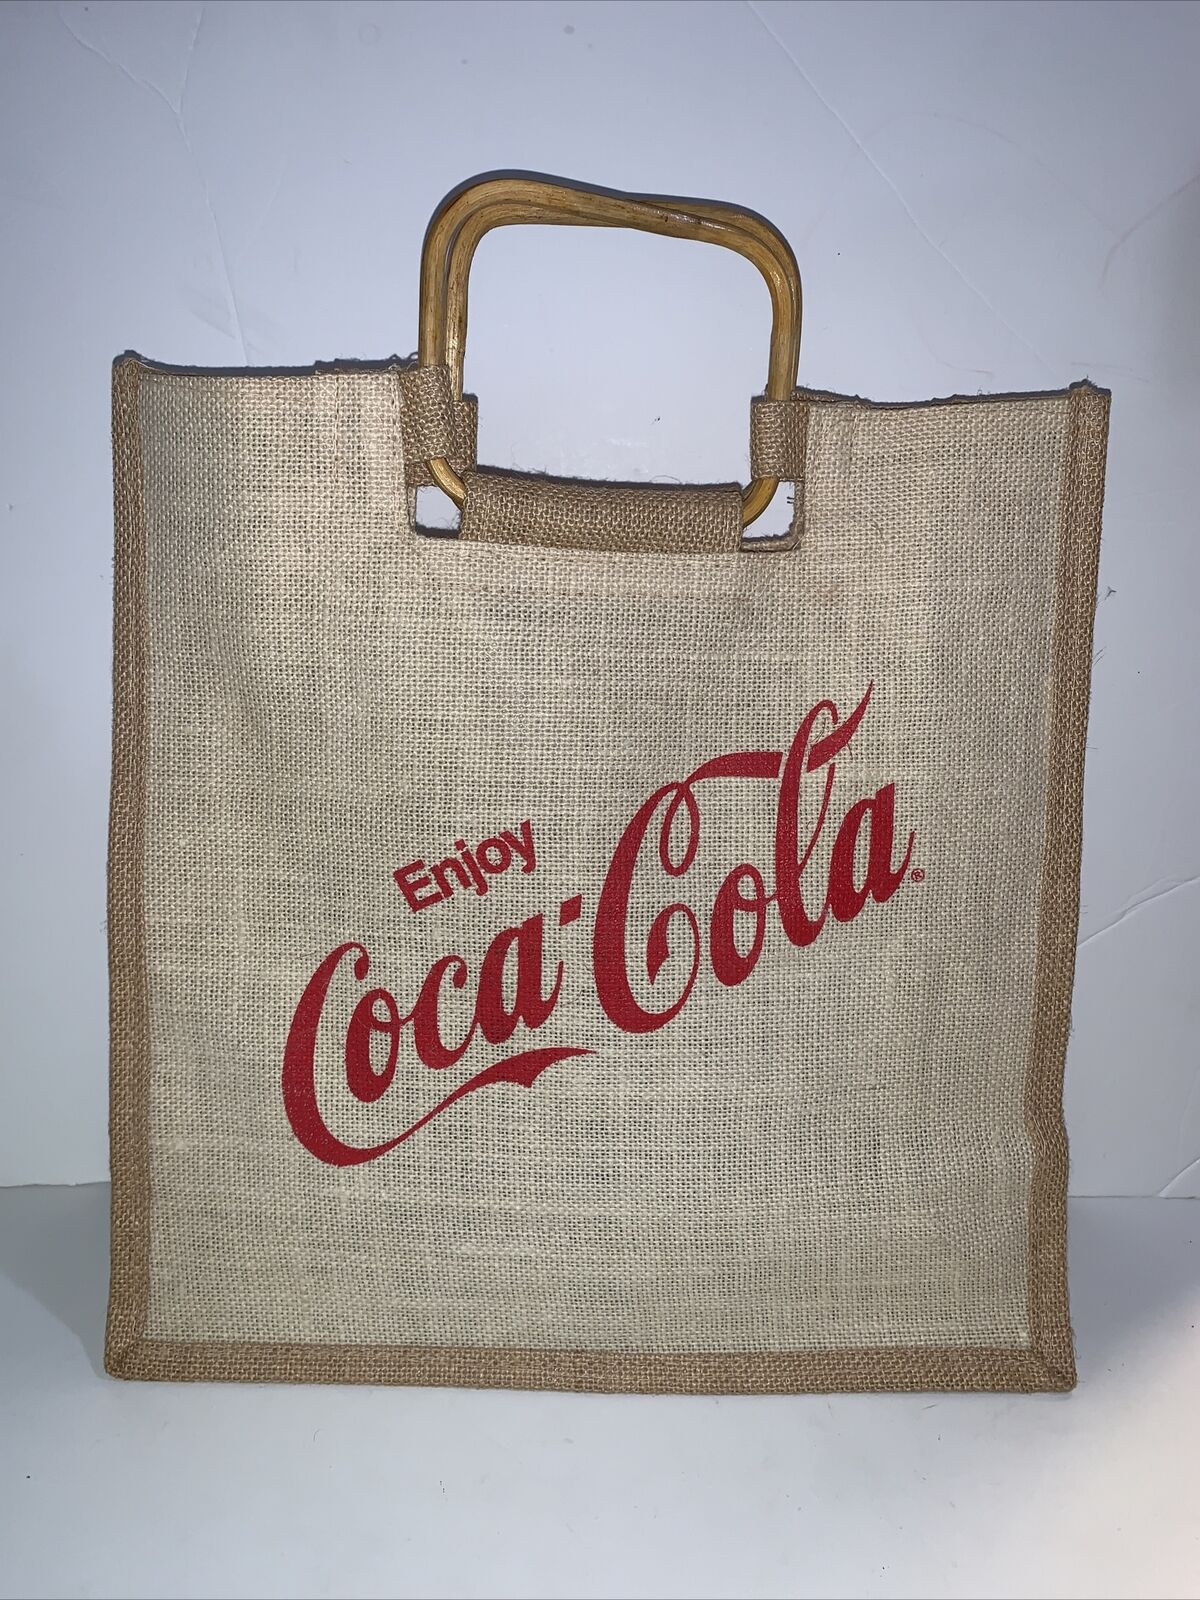 VTG Enjoy Coca-Cola Burlap Jute Beach Bag Handbag w Wood Bamboo Handles Lined